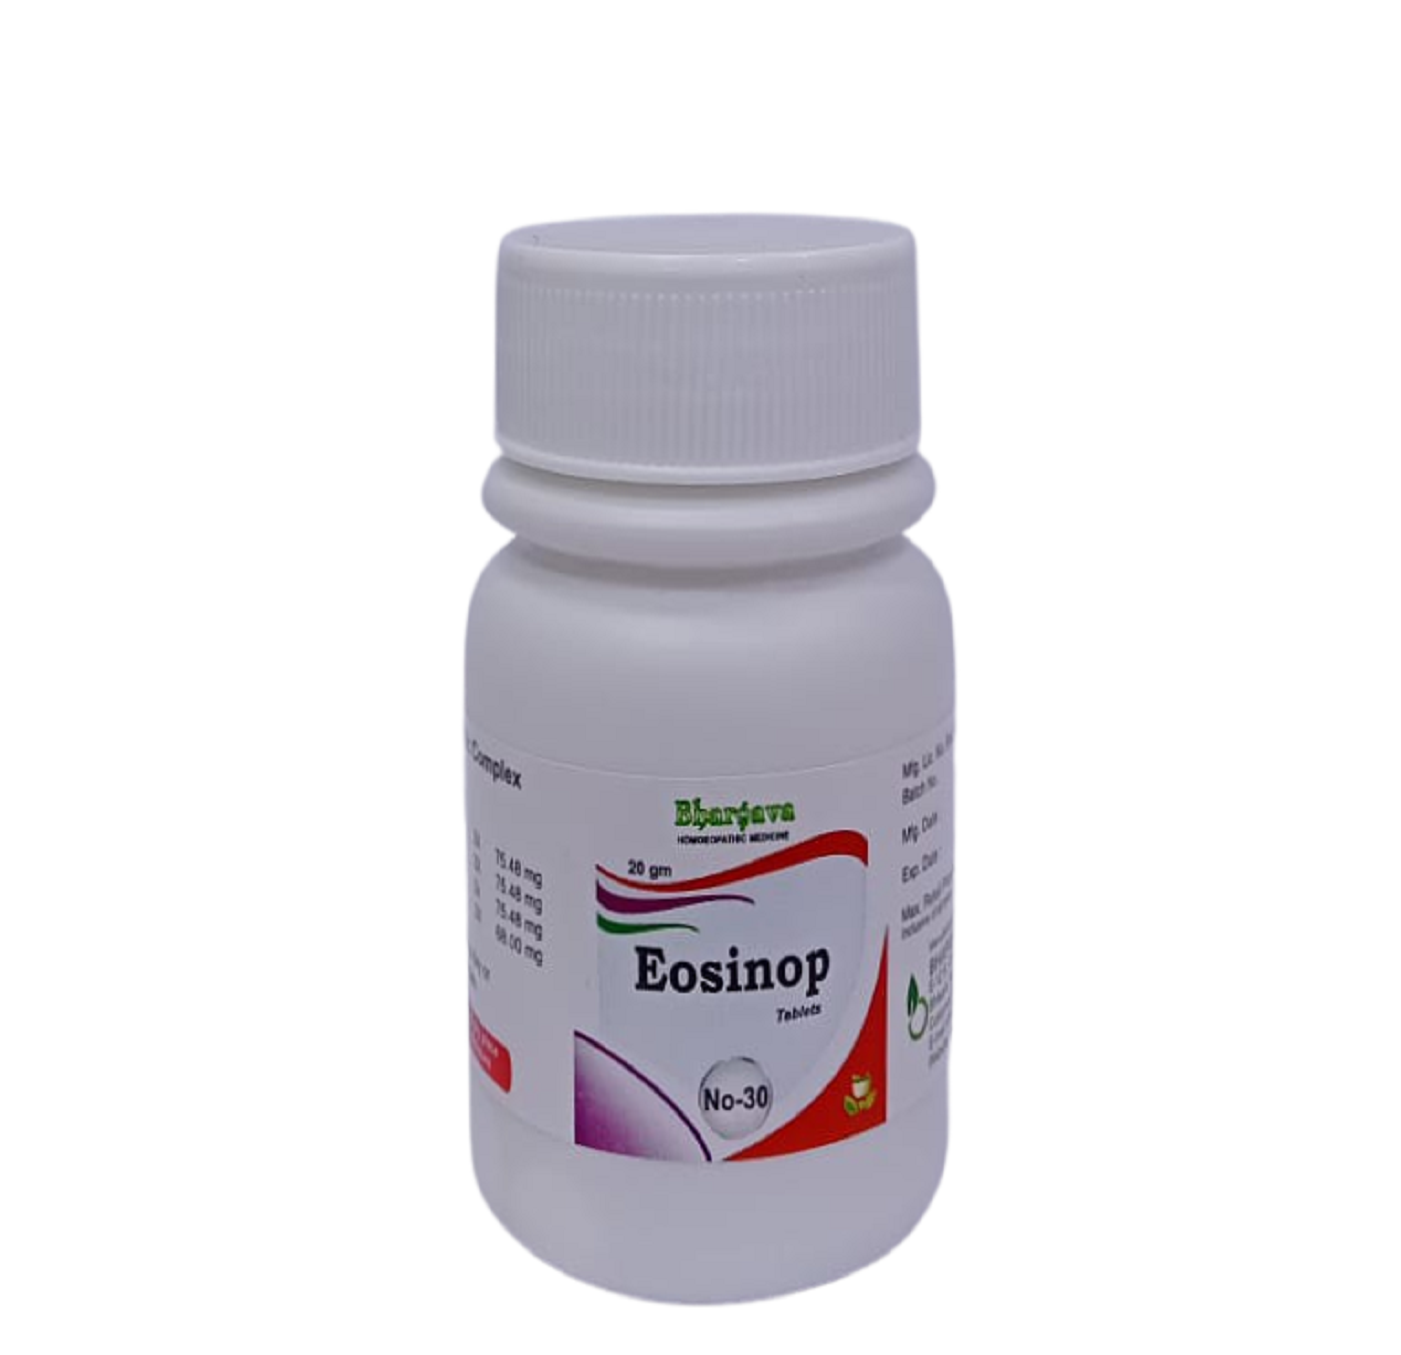 Eosinop Tablets Homeopathic Medicine